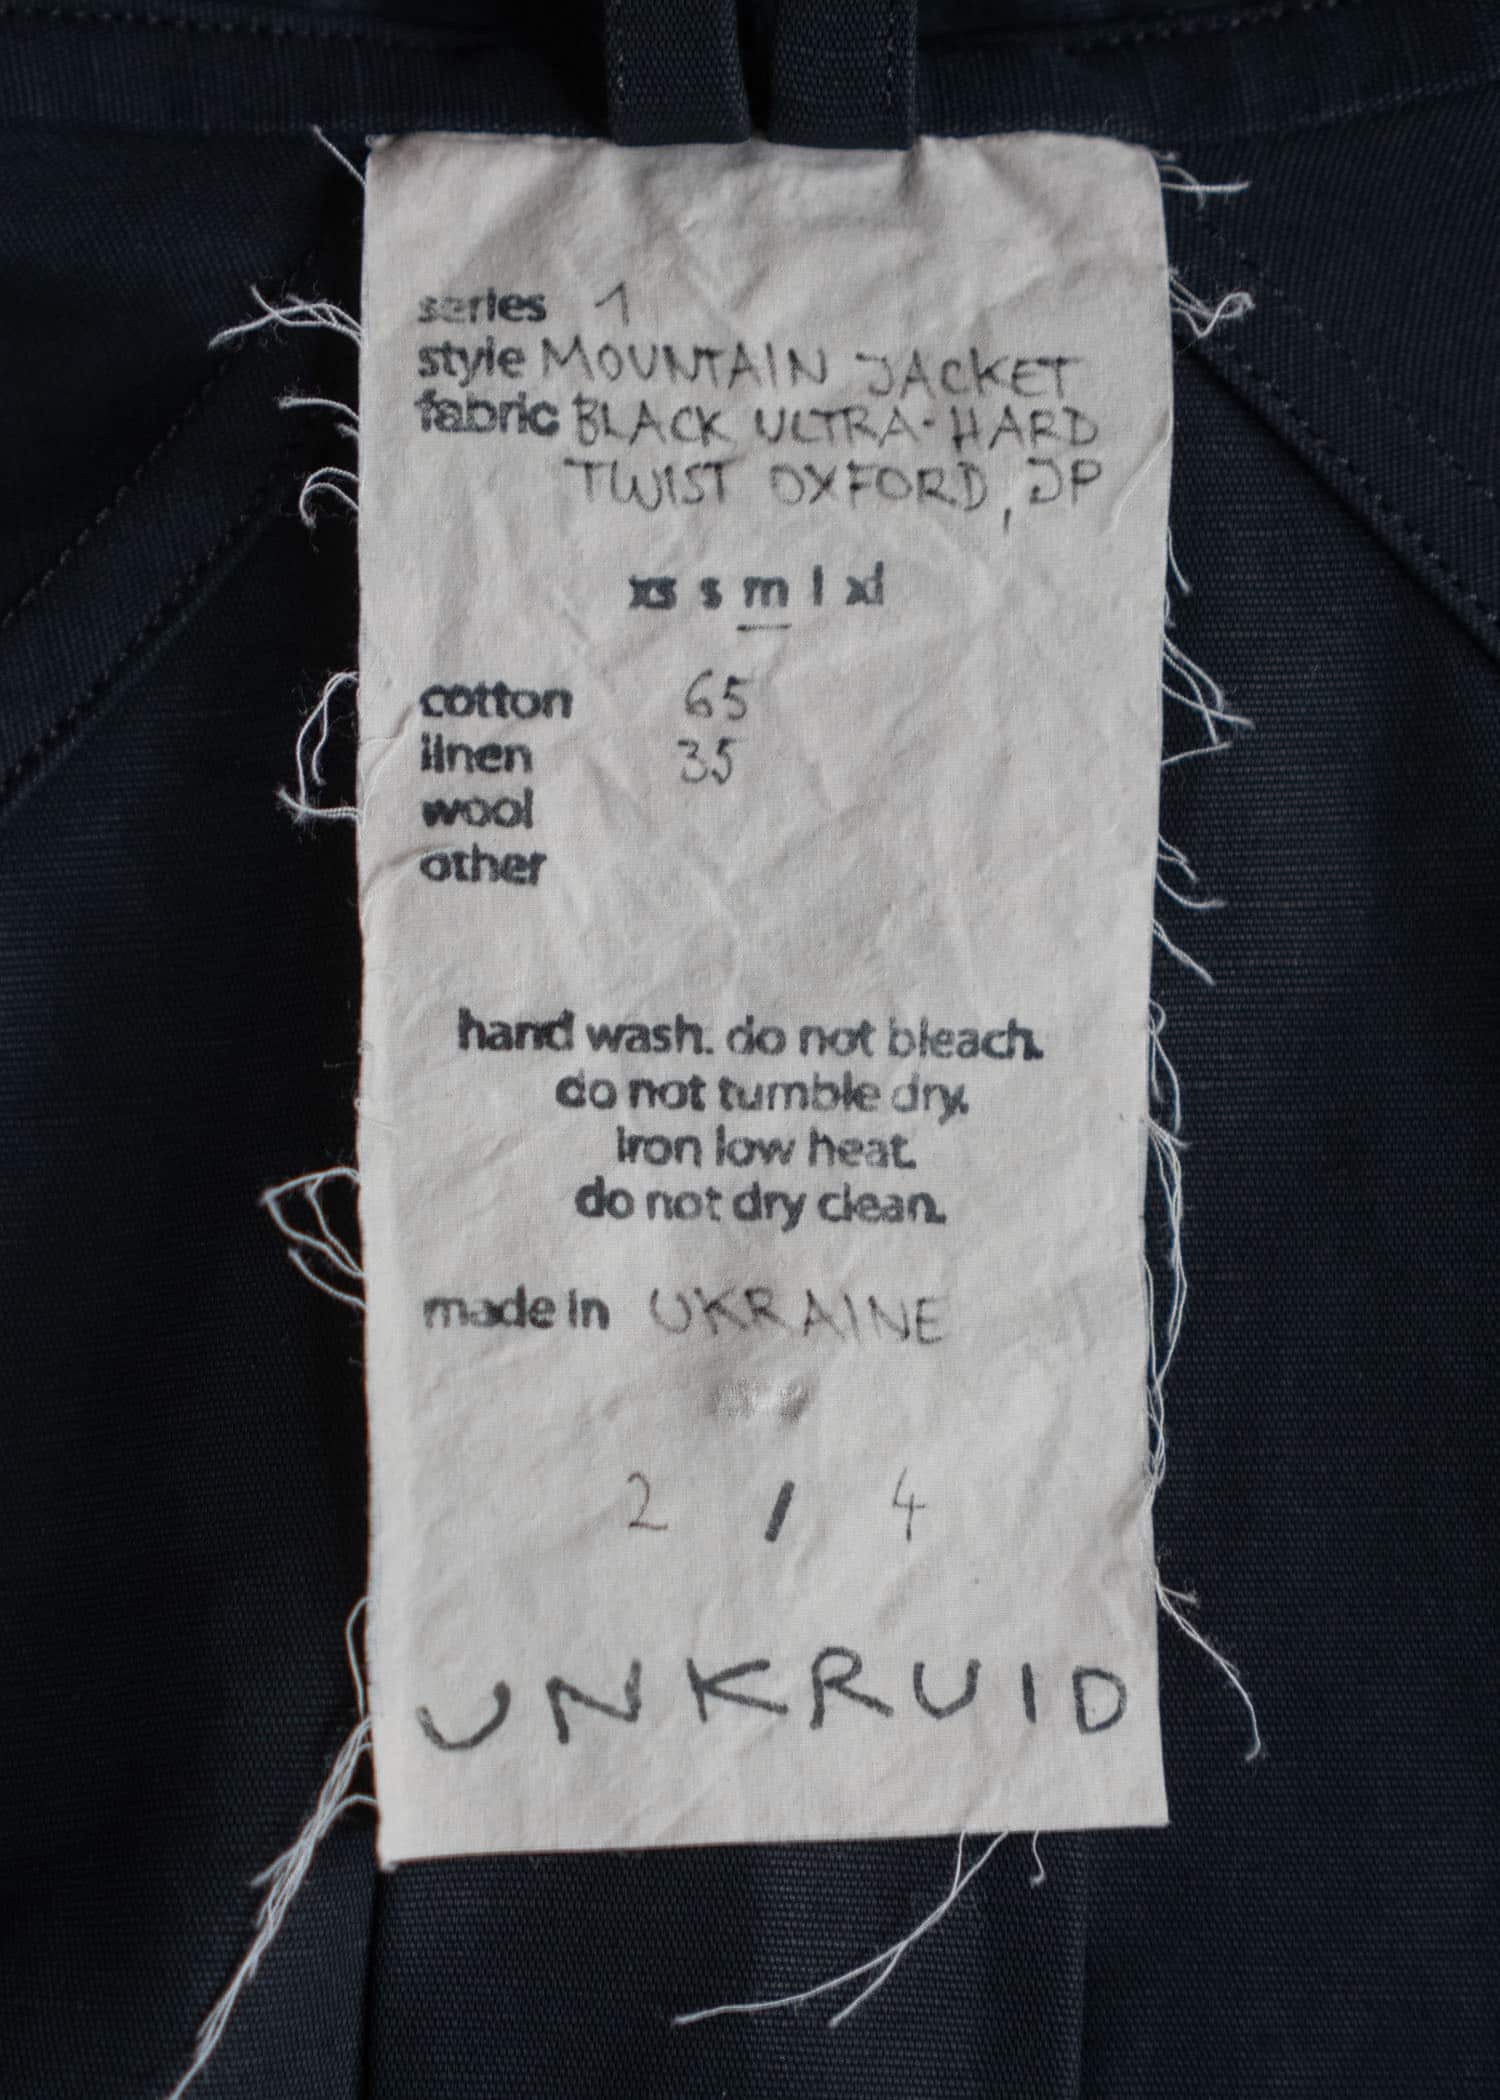 unkruid Mountain Jacket  Black ultra-hard twist oxford